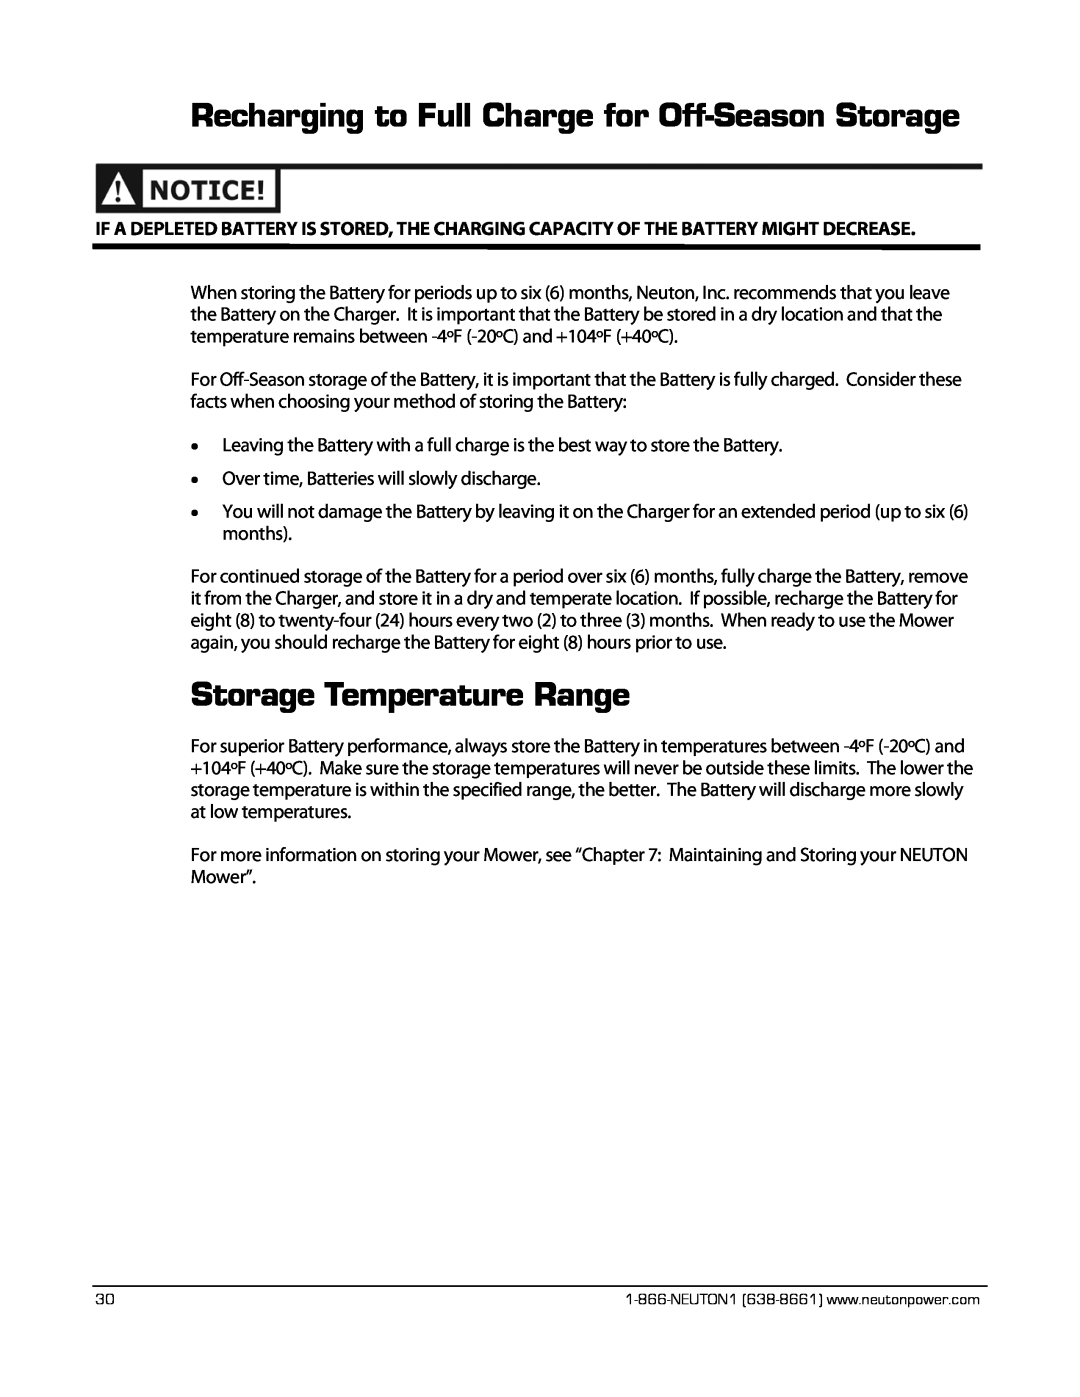 Neuton CE 6.2 manual Recharging to Full Charge for Off-SeasonStorage, Storage Temperature Range 